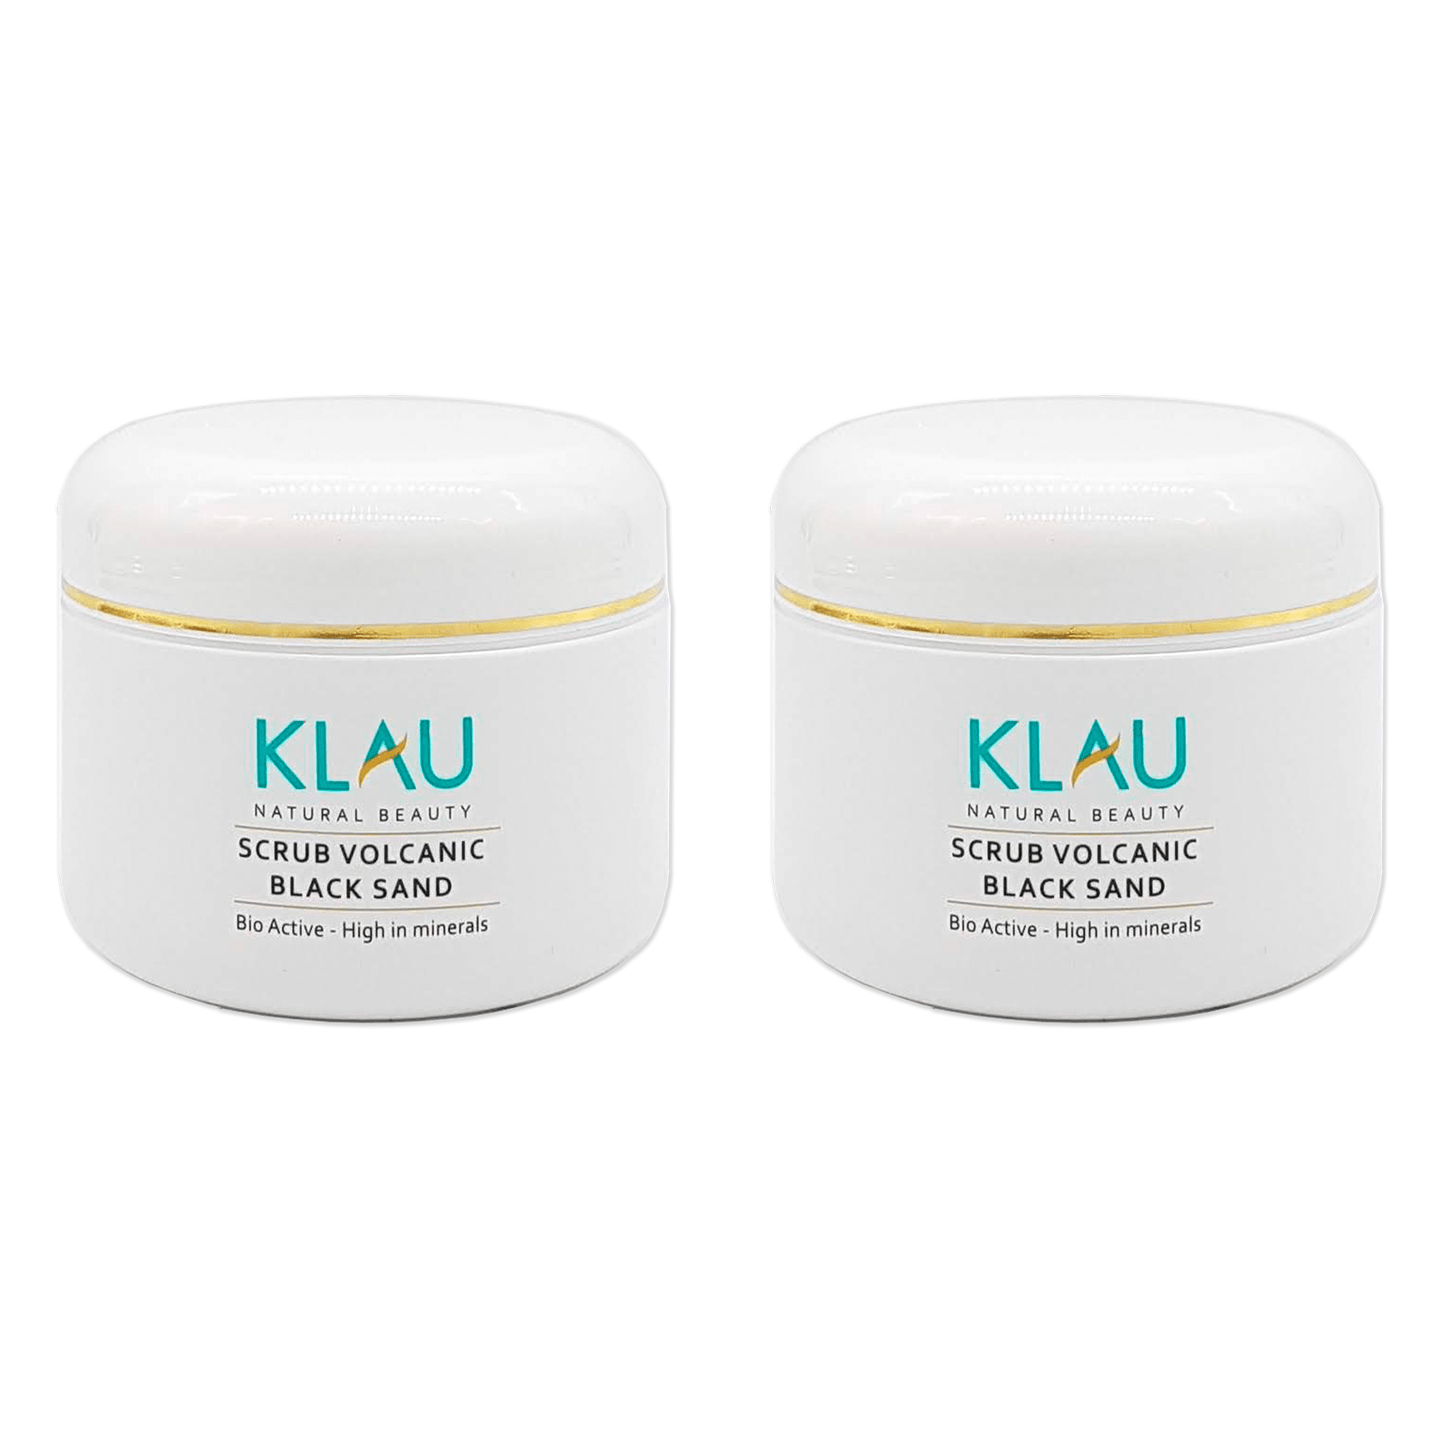 Your Custom Box - Choose your 2 favorite KLAU products